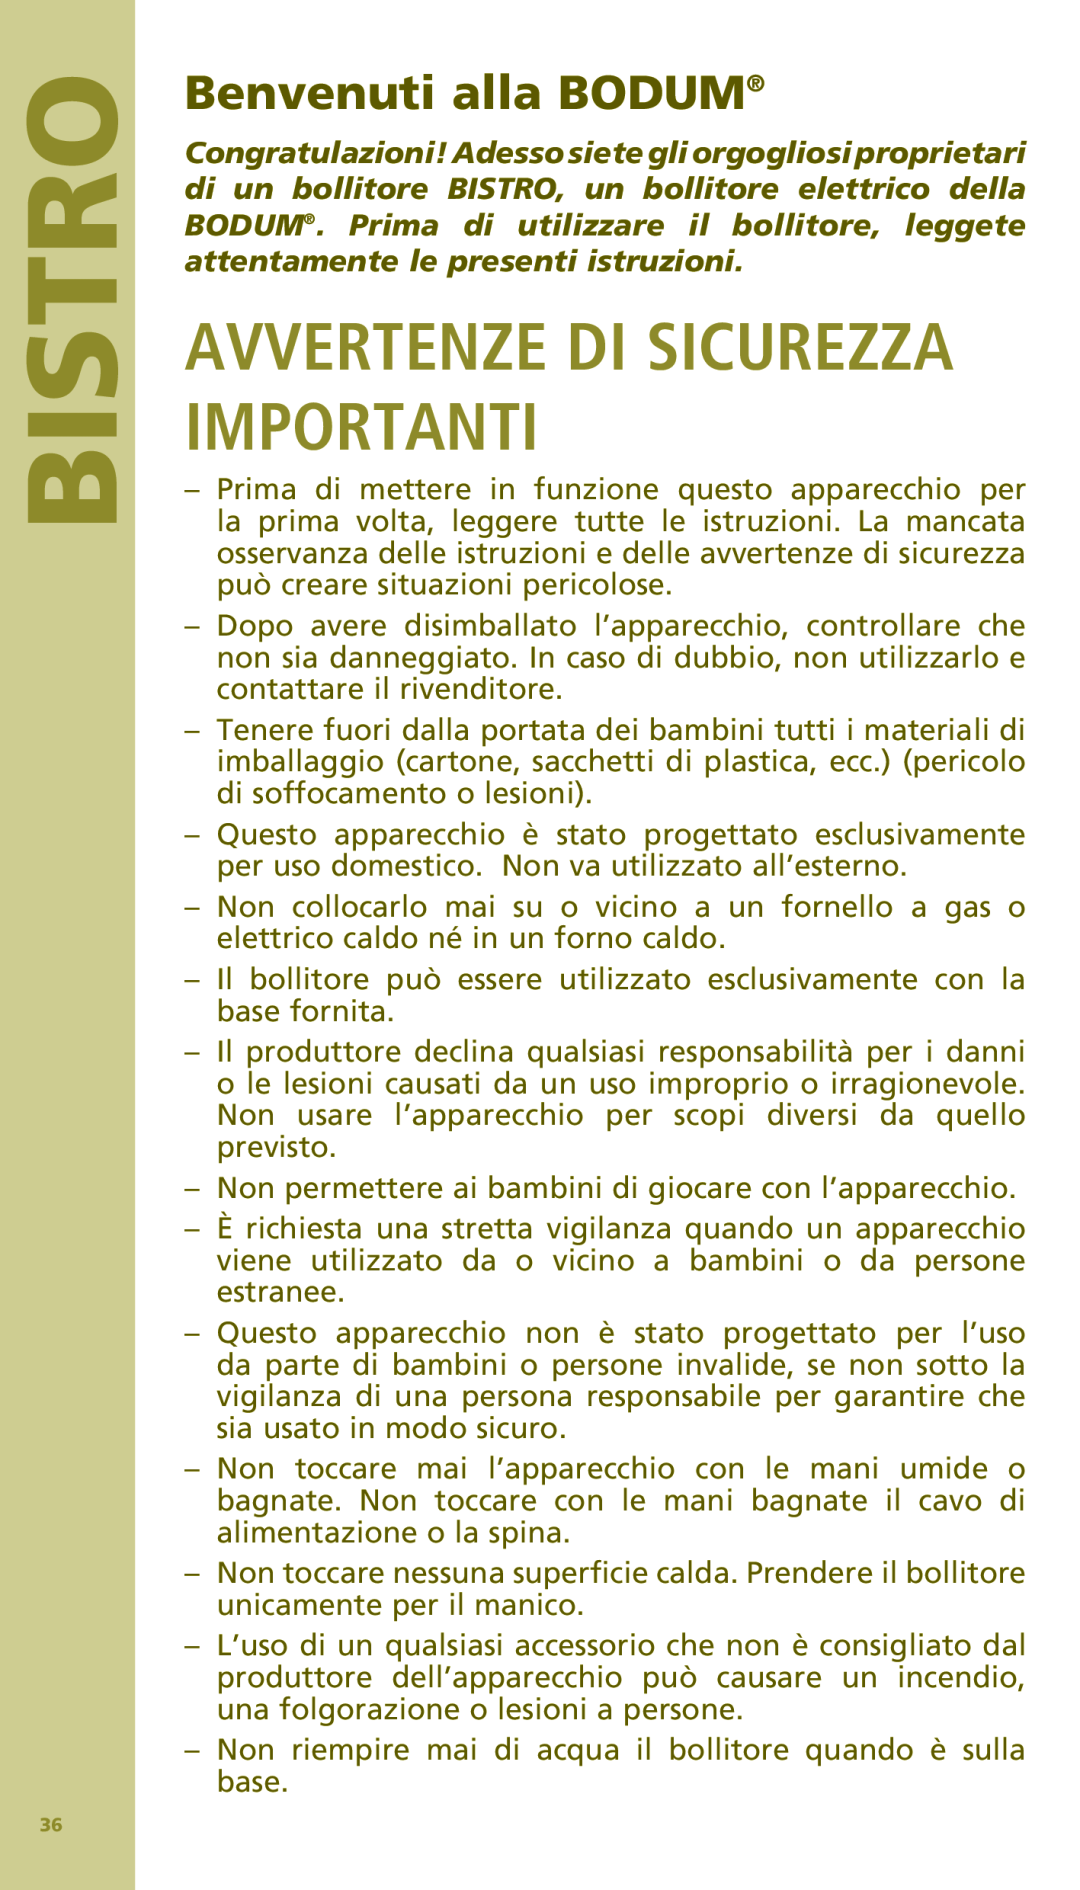 Bodum 11154 manual Avvertenze Di Sicurezza Importanti, Benvenuti alla BODUM, Bistro 